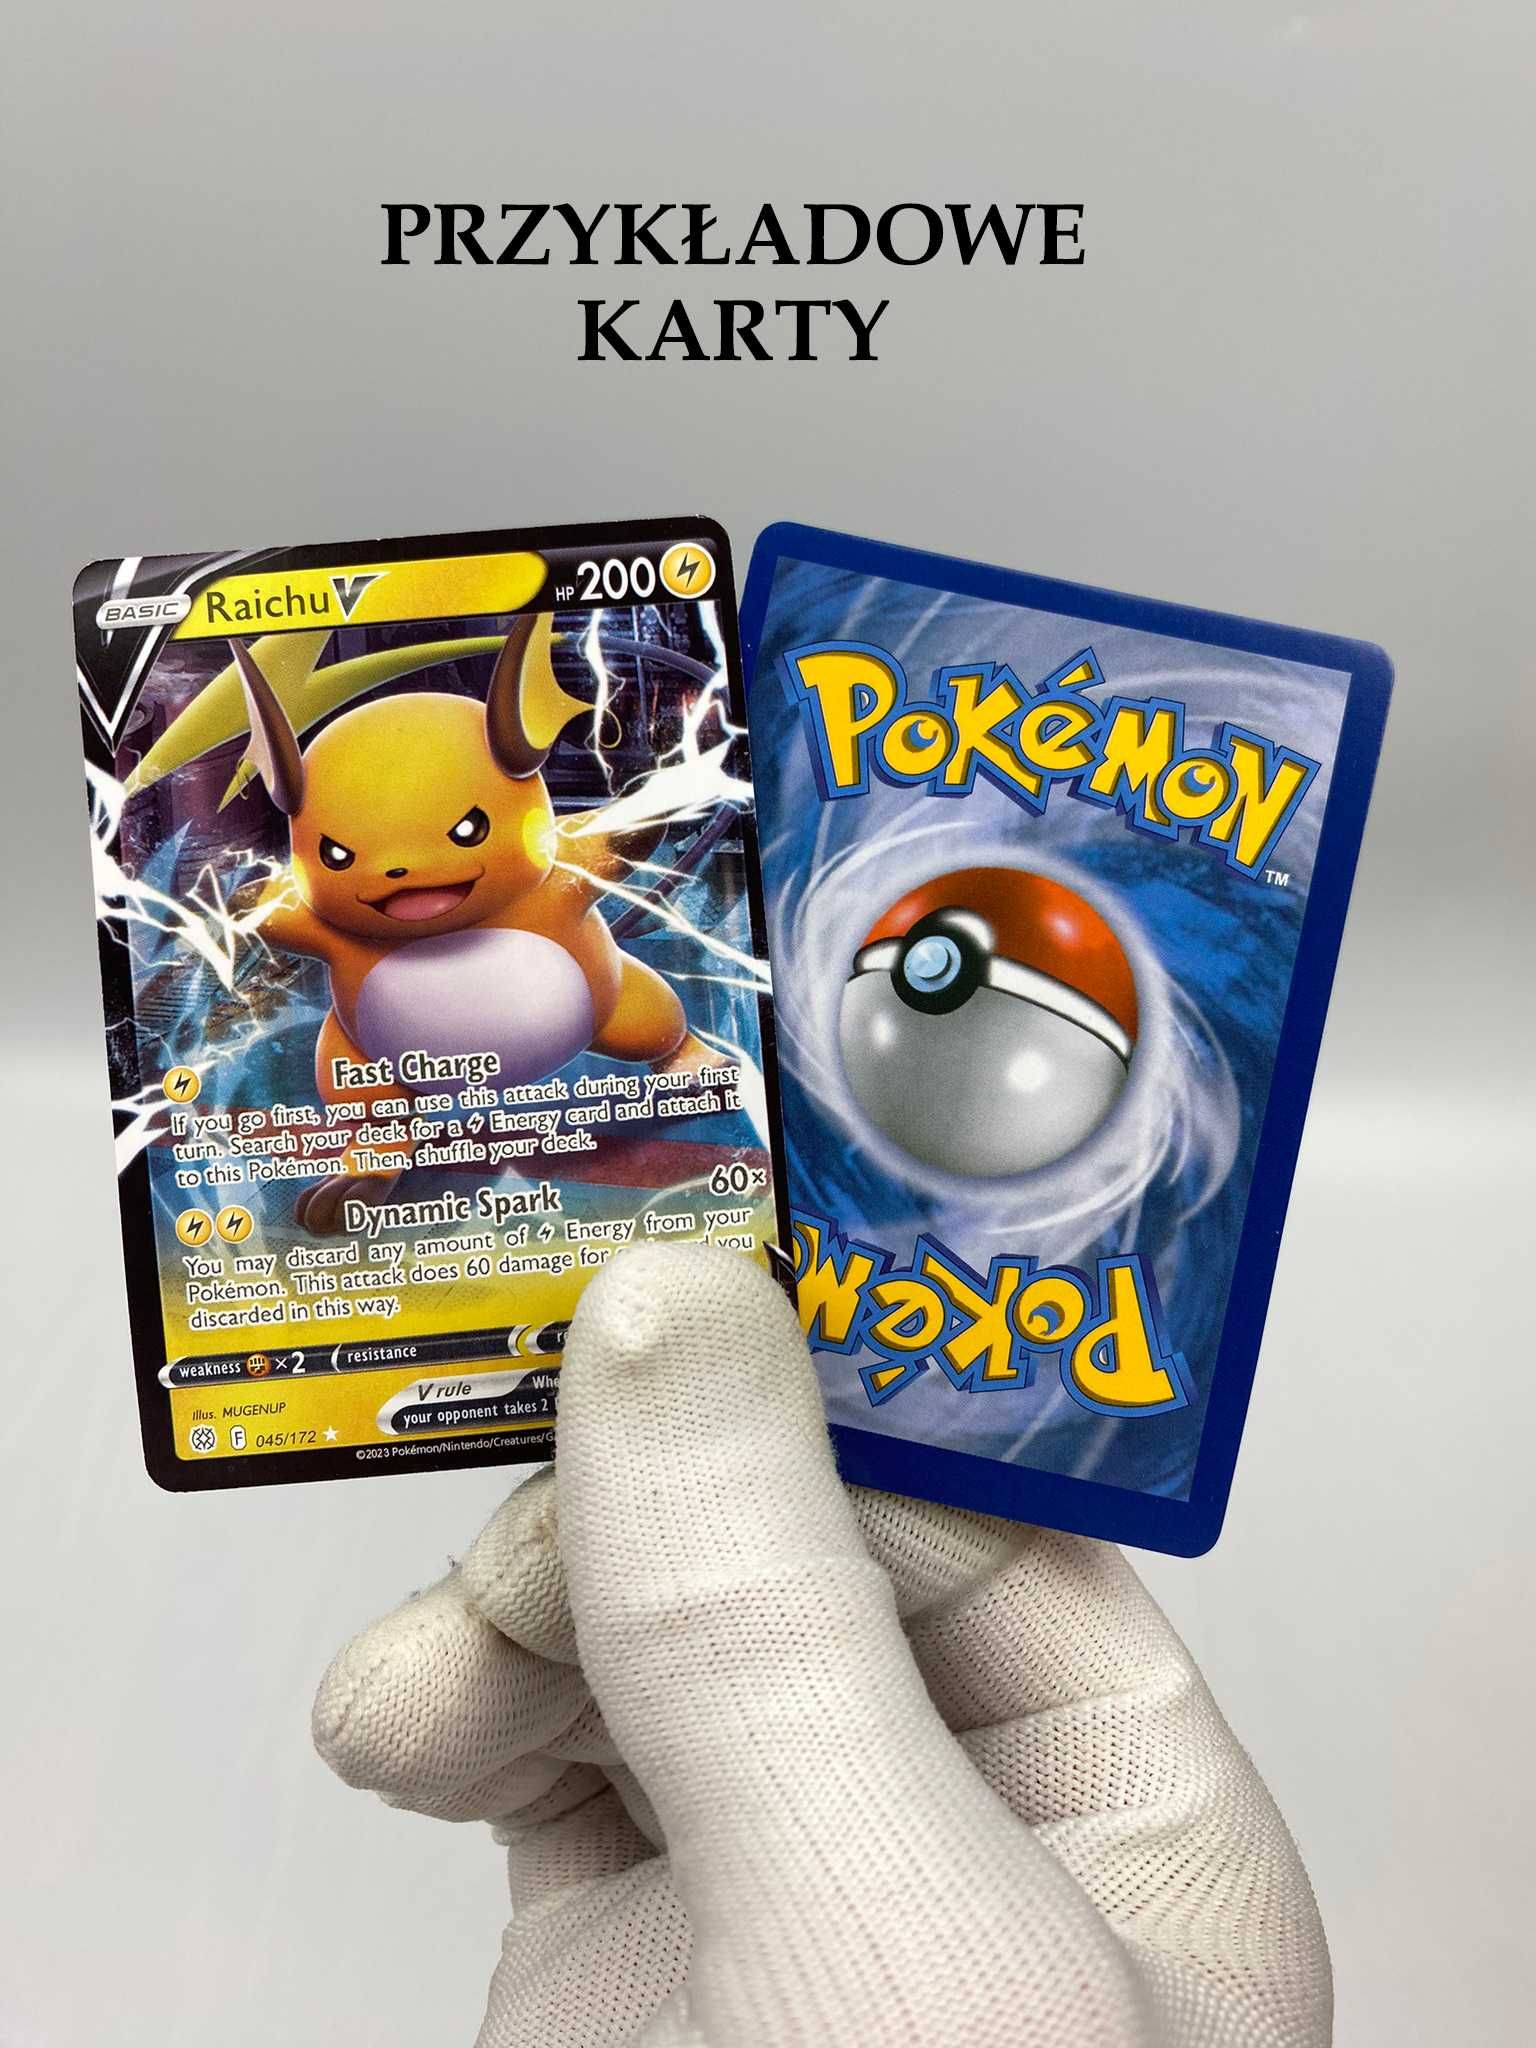 Album Karty Pokeball KOMPLETNY Pakiet Pokemon